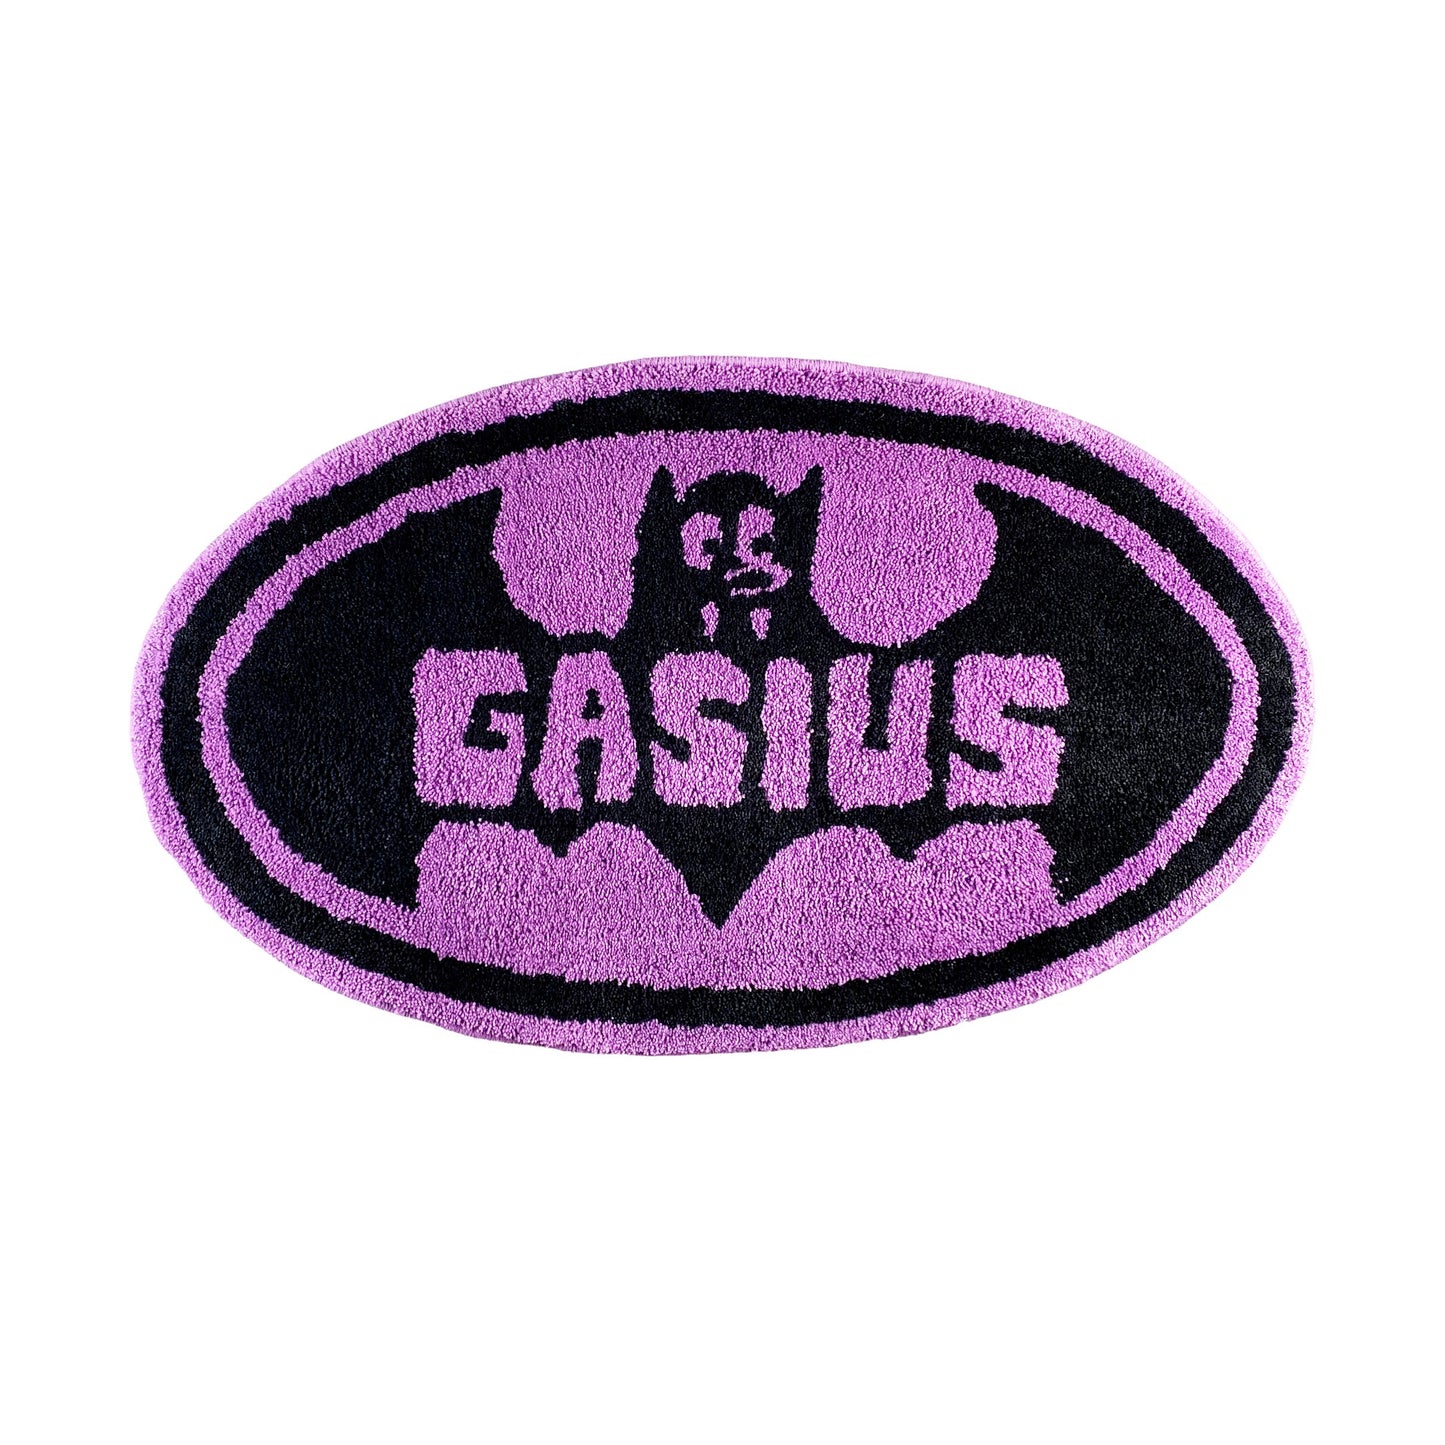 Gasius Teppich "Bat" -purple/black